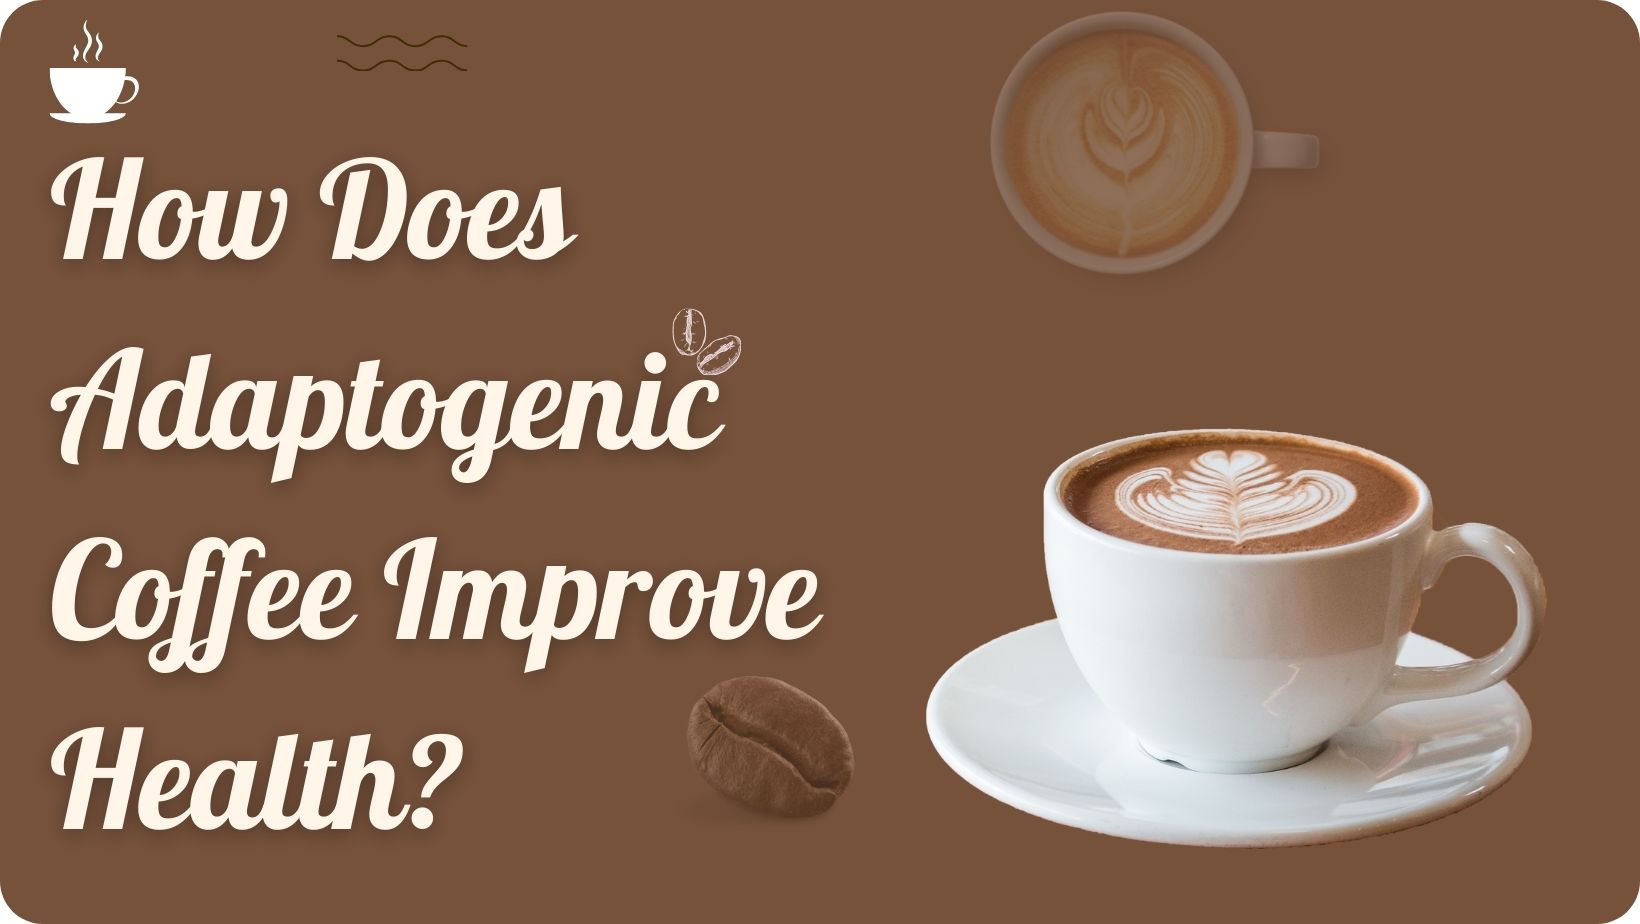 How Does Adaptogenic Coffee Improve Health?